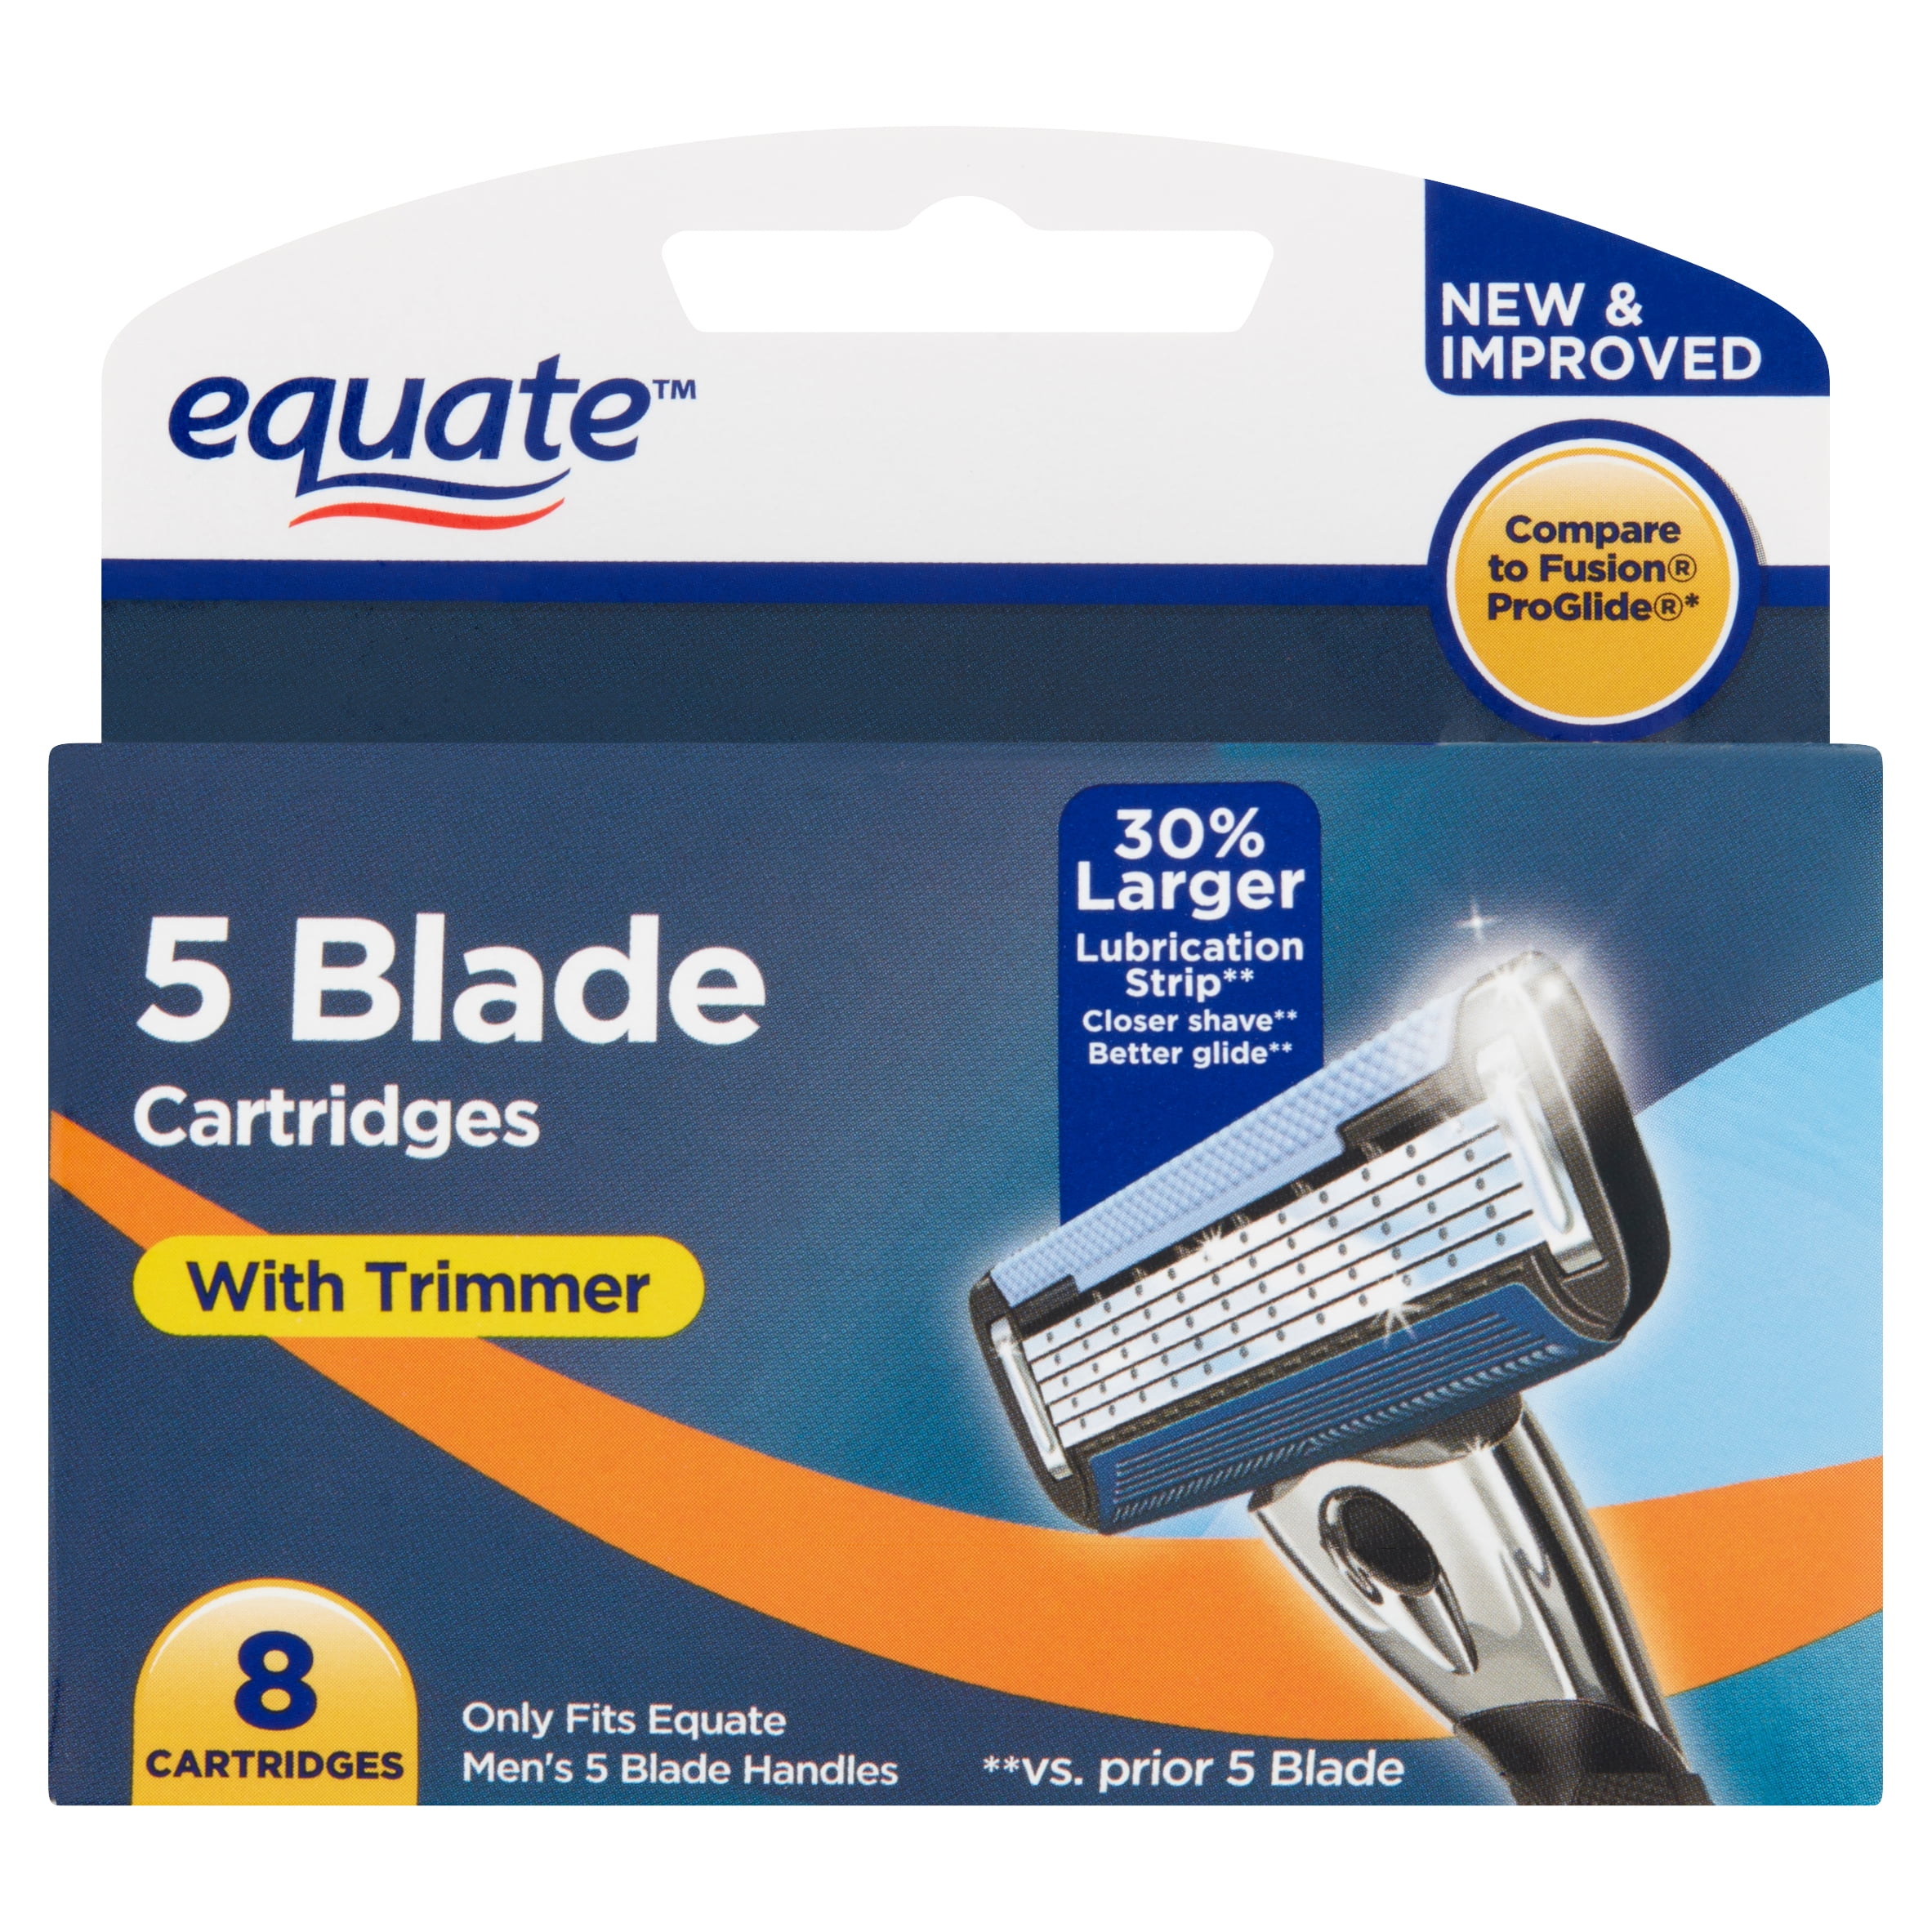 Equate 5 Blade Cartridges with Trimmer, 8 Walmart.com